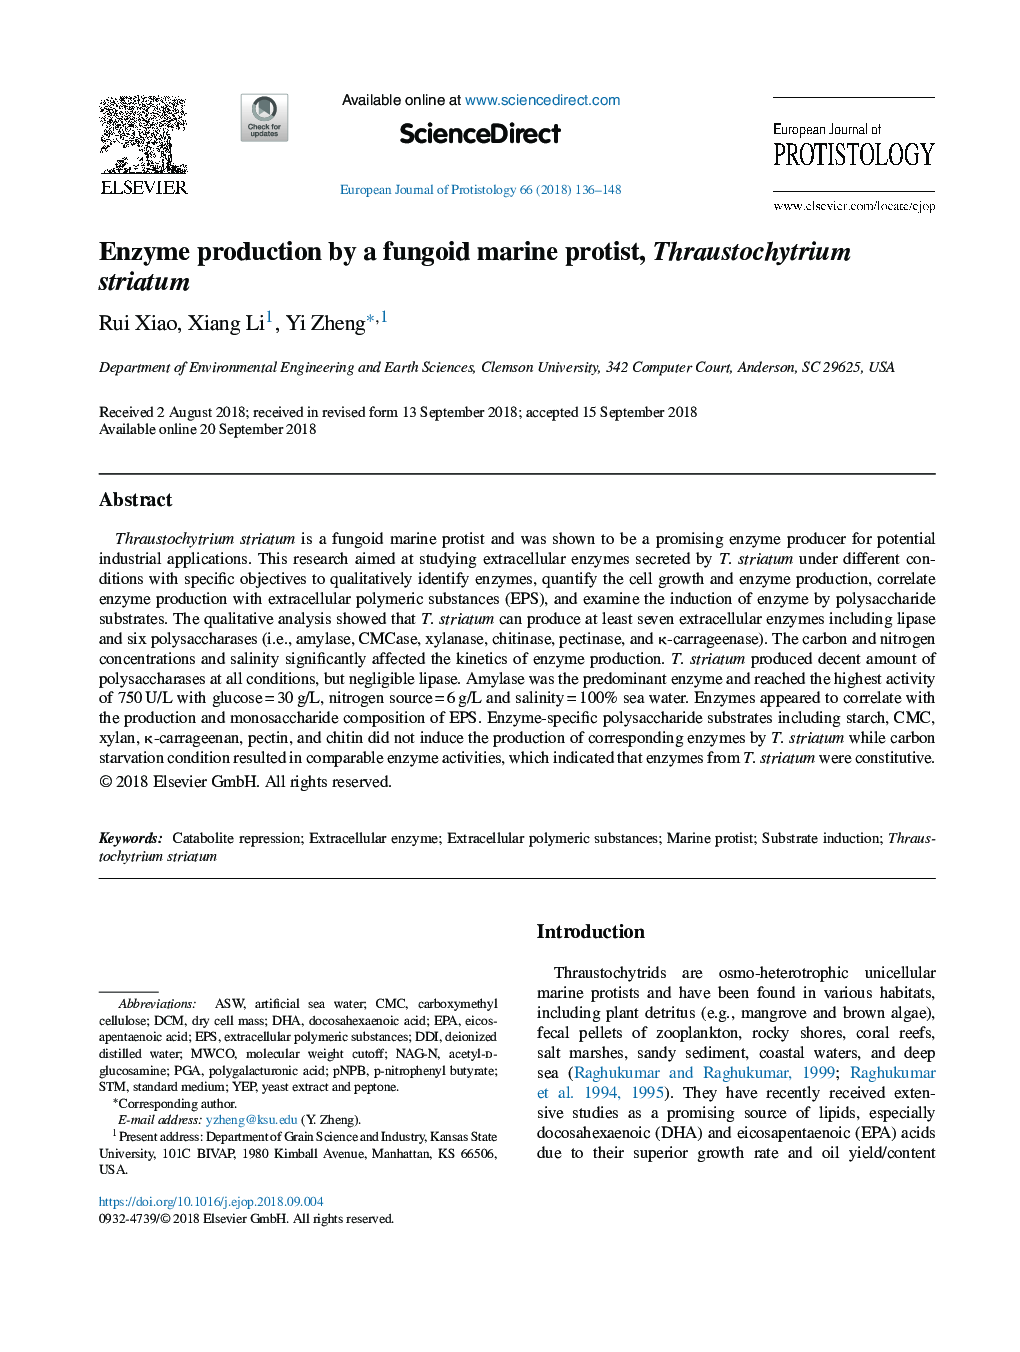 Enzyme production by a fungoid marine protist, Thraustochytrium striatum